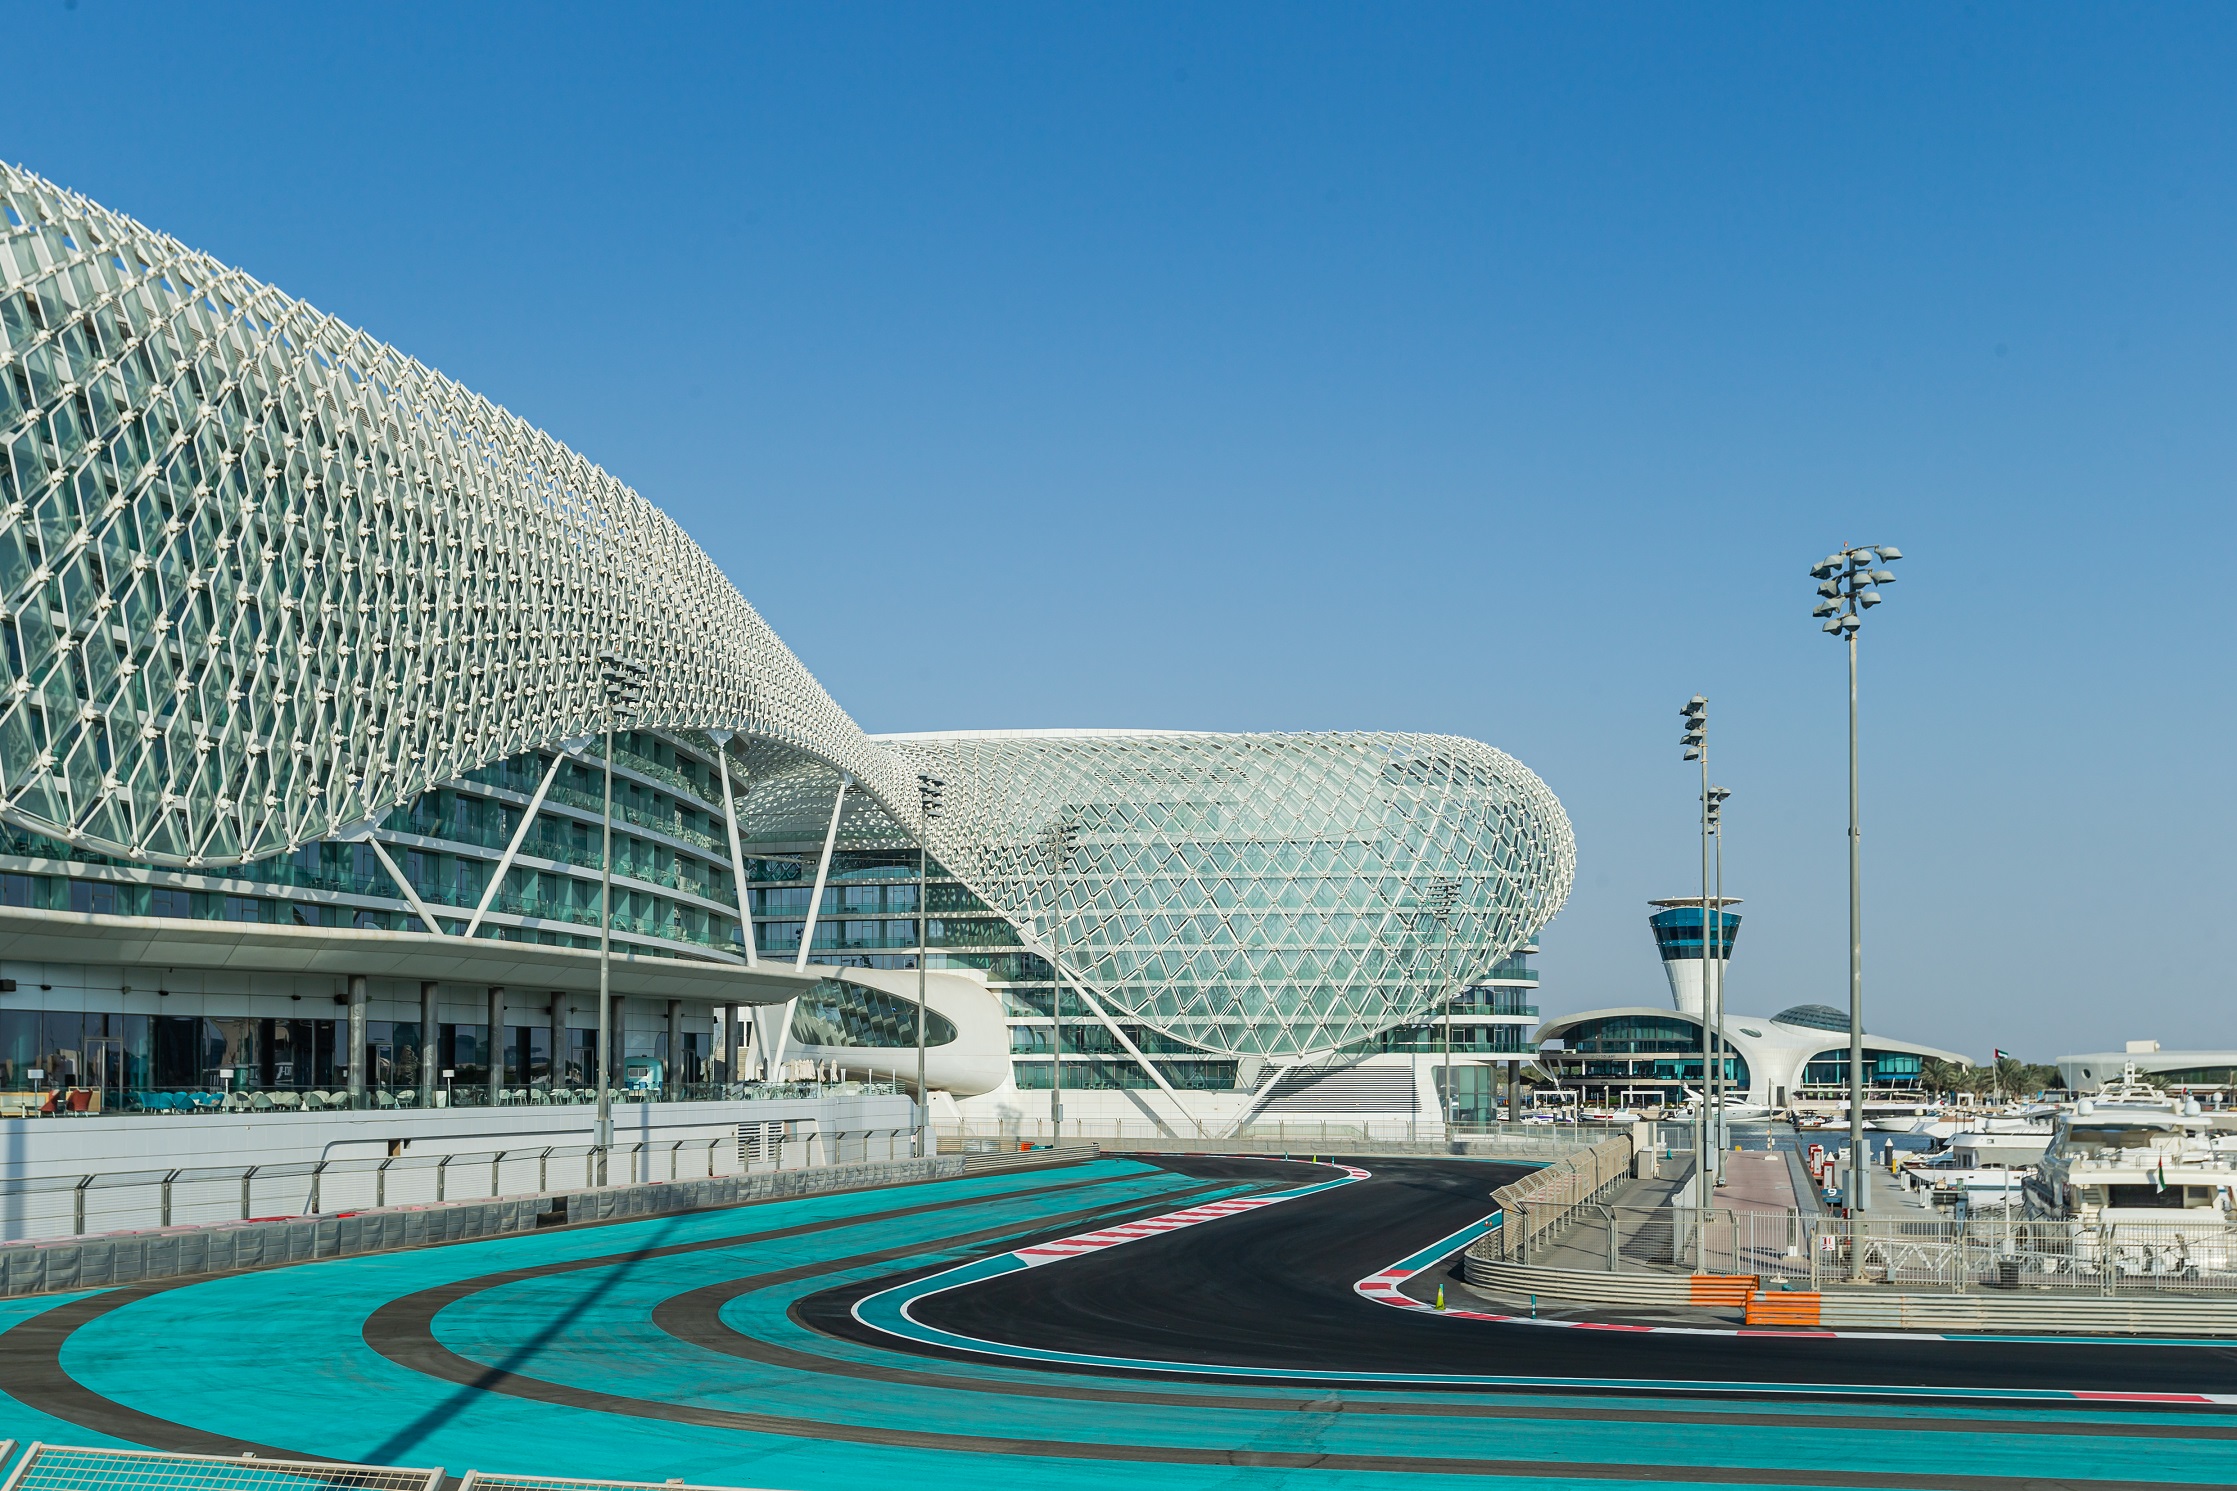 Yas Marina Circuit Showcases Completed Track Renovation Ahead Of 2021 Abu Dhabi Grand Prix